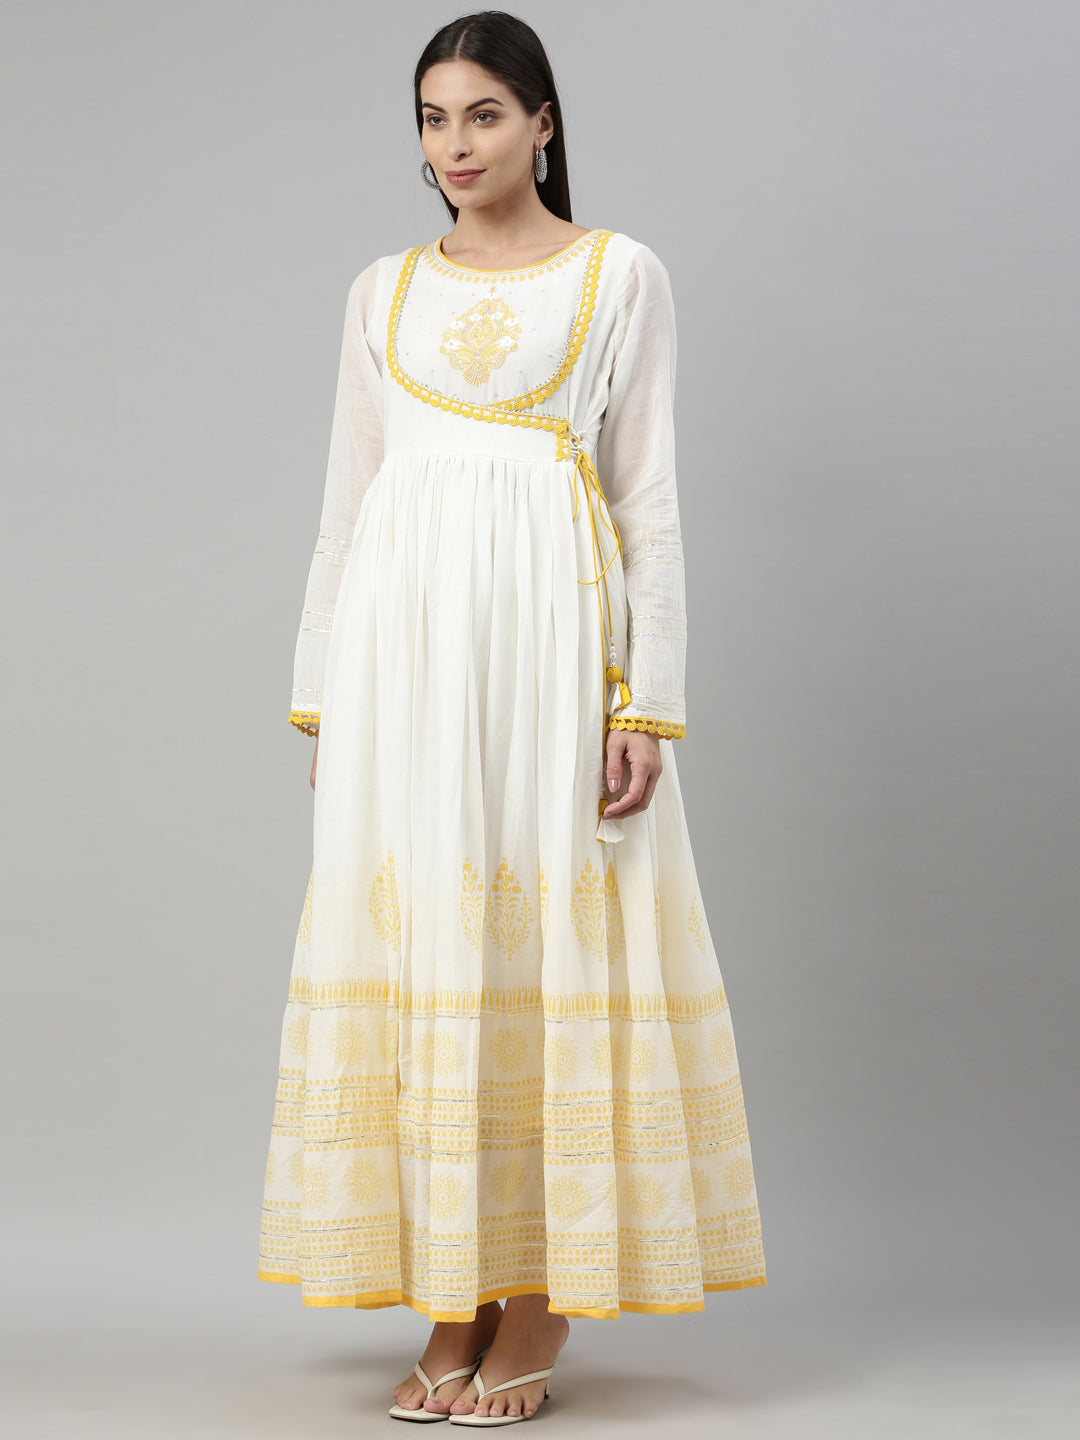 Neeru'S YELLOW Color COTTON Fabric Kurta With Dupatta